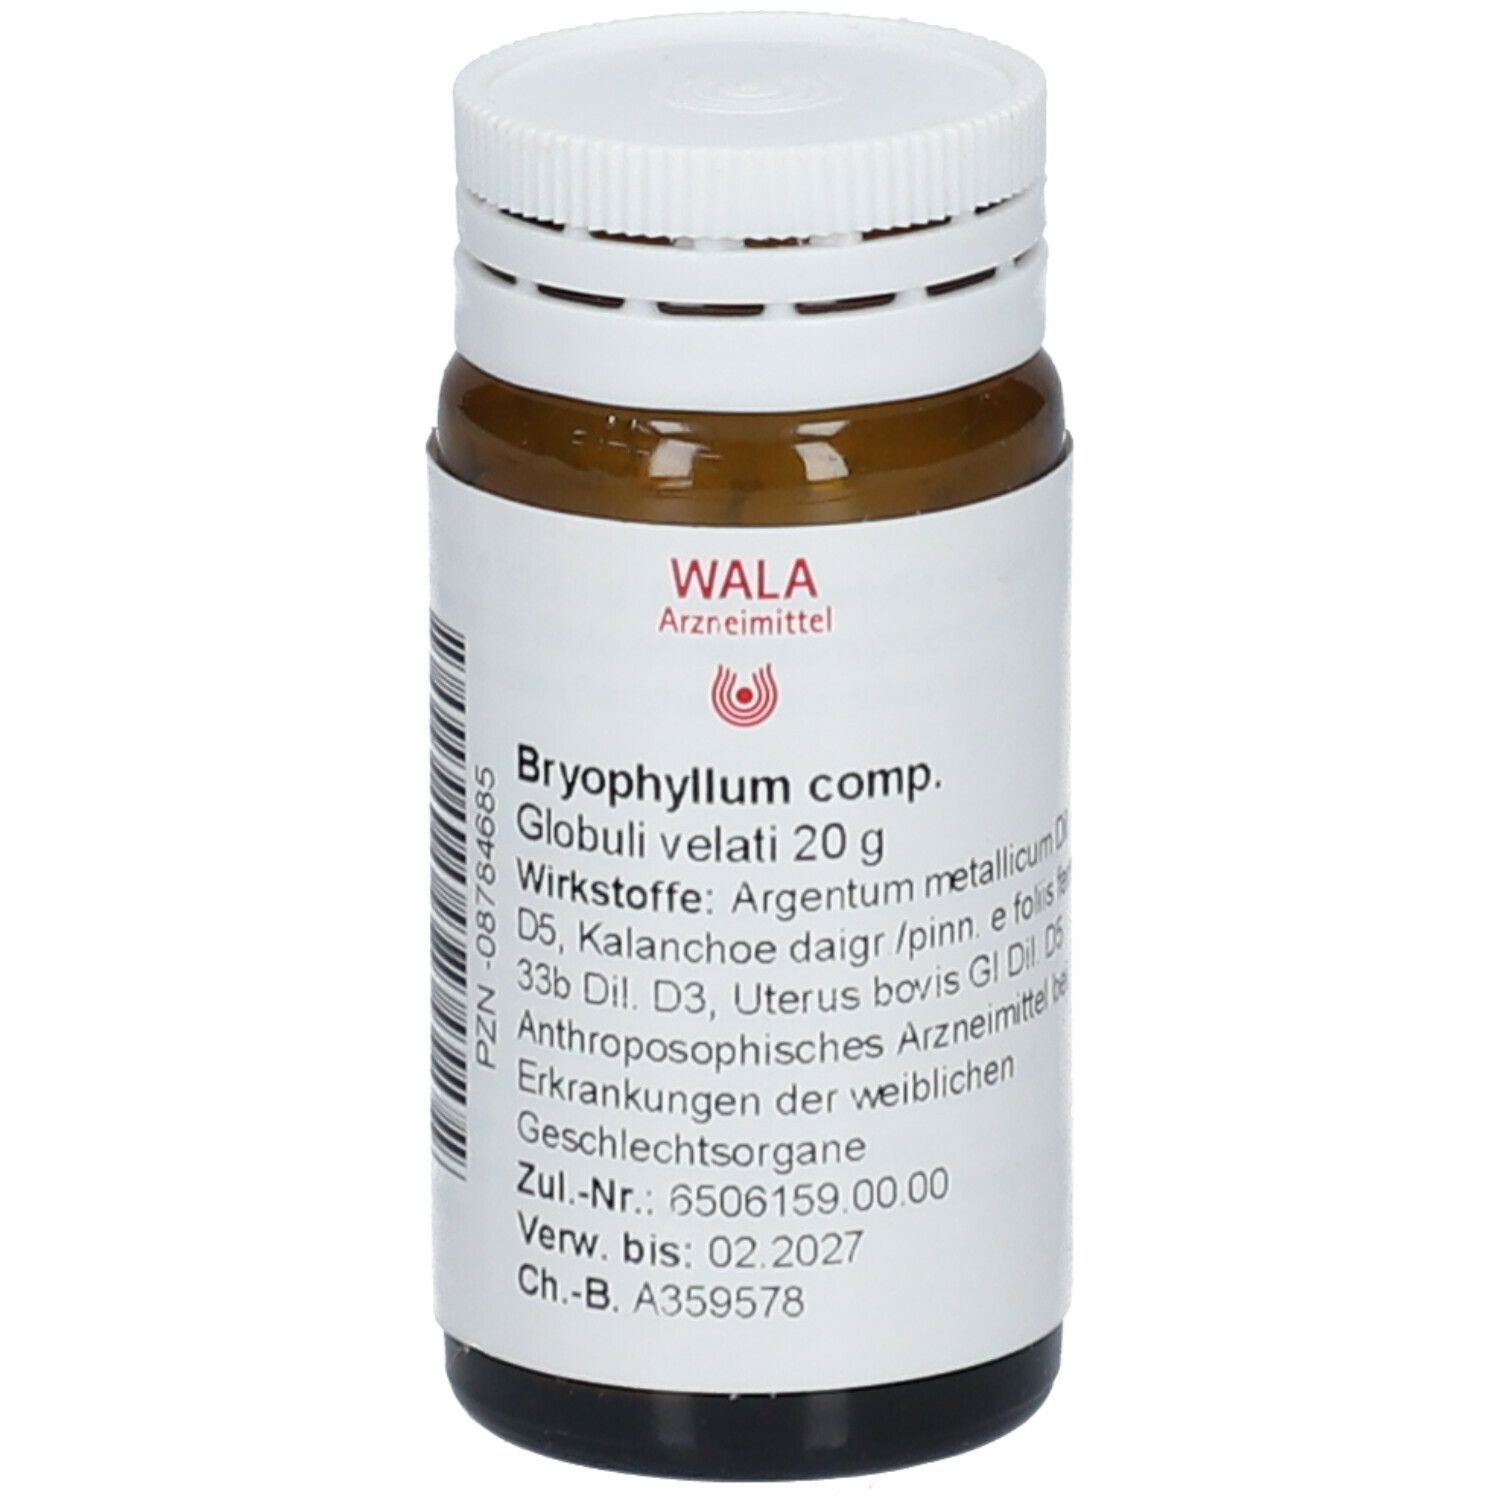 WALA® Bryophyllum Comp. Globuli